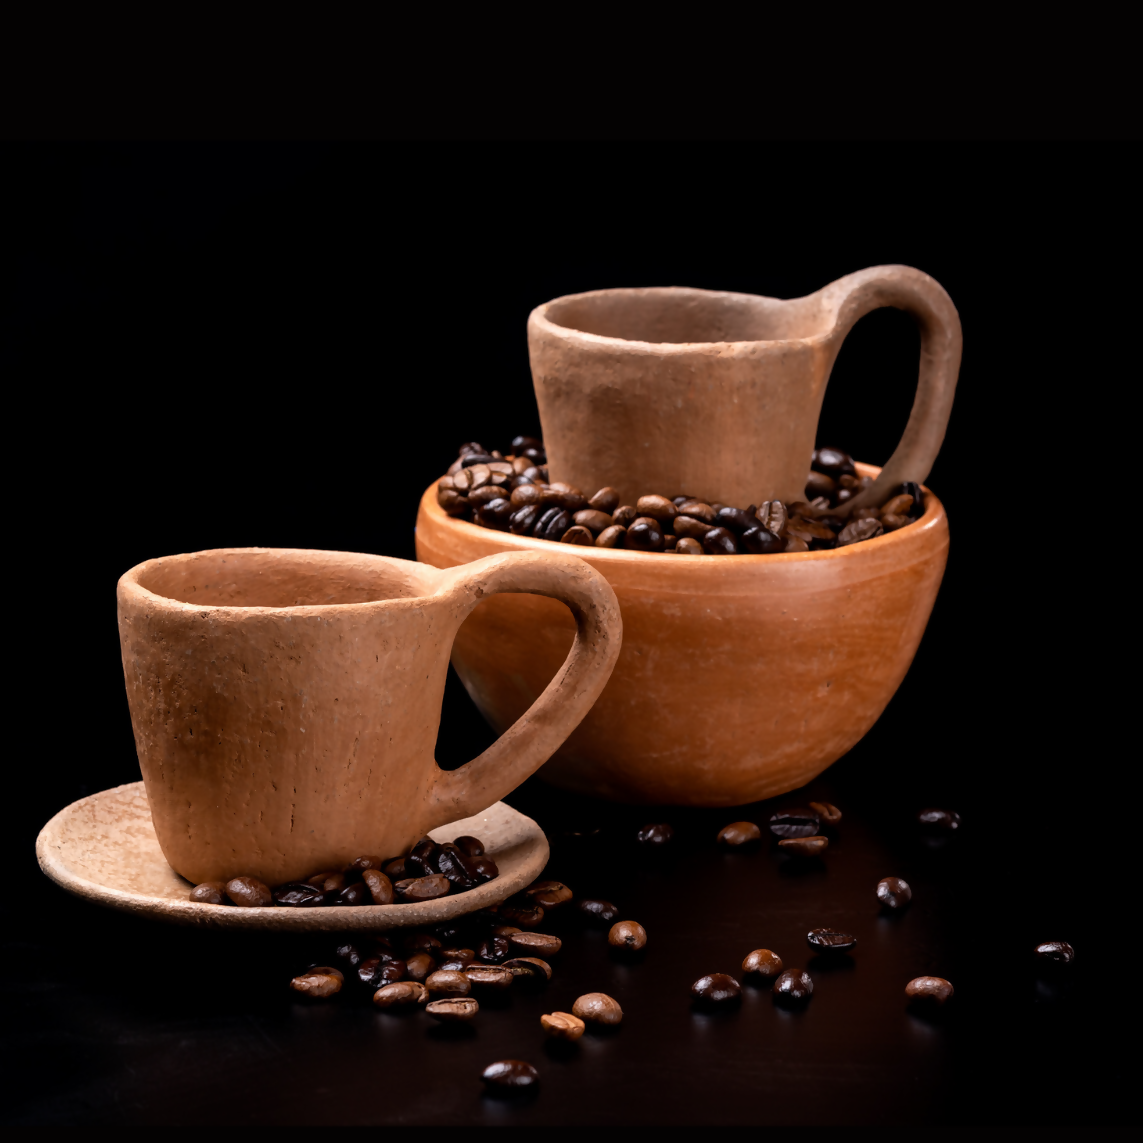 Tlahuitoltepec Rustic Espresso Cup And Saucer Set